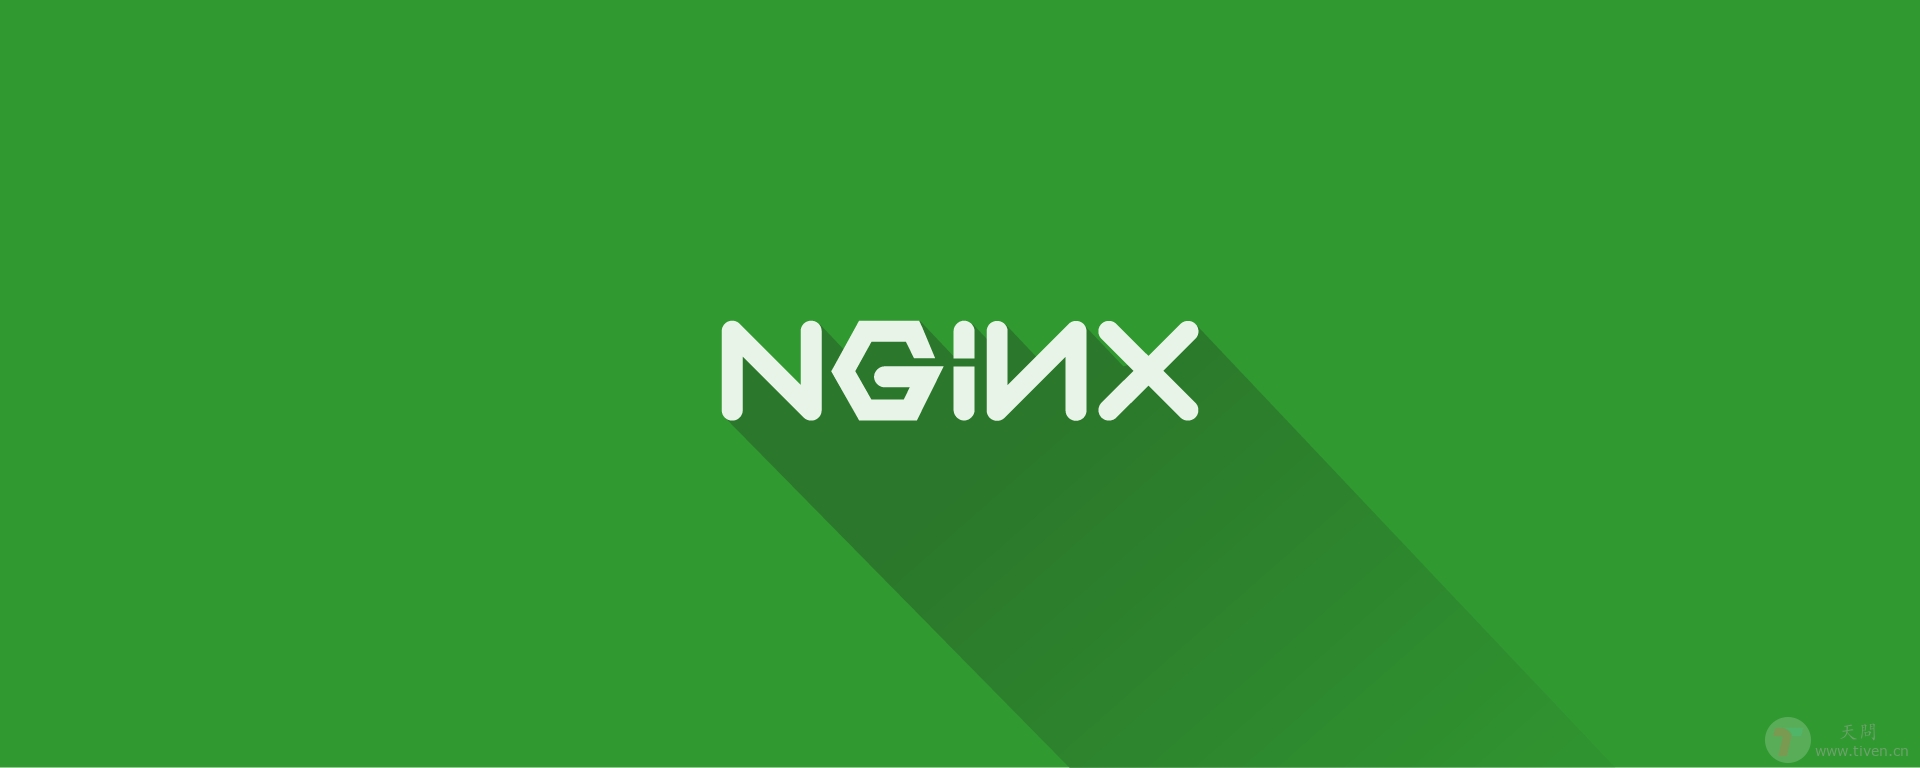 Nginx 206 (Partial Content)